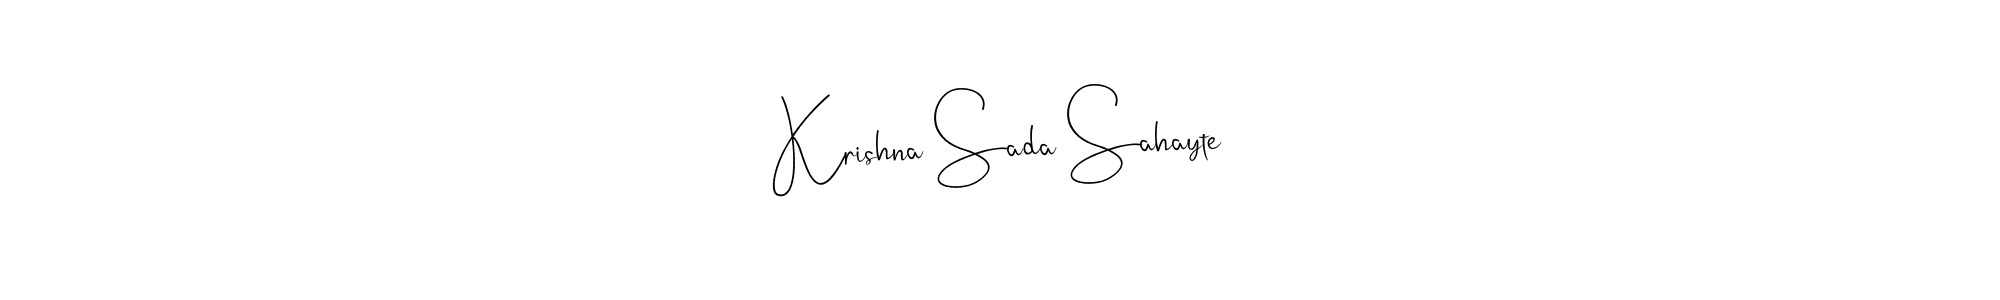 How to Draw Krishna Sada Sahayte signature style? Andilay-7BmLP is a latest design signature styles for name Krishna Sada Sahayte. Krishna Sada Sahayte signature style 4 images and pictures png